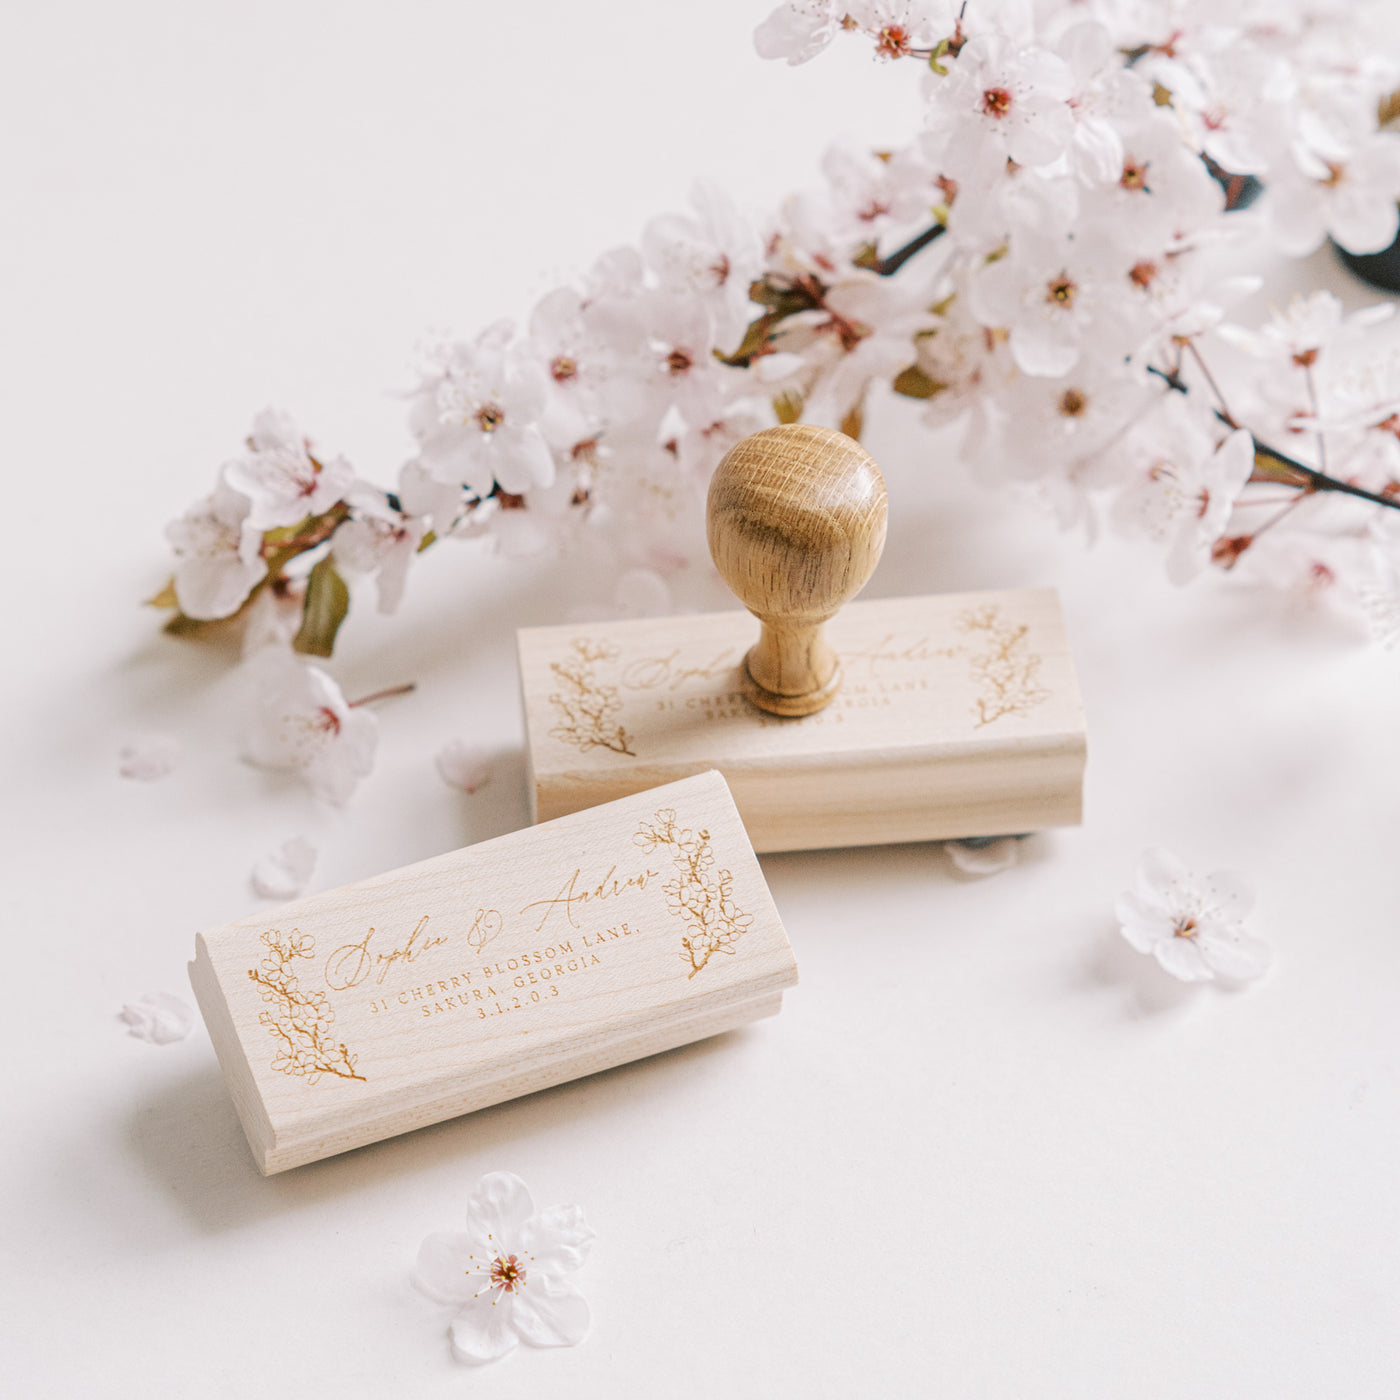 Haruki Cherry Blossom Return Address Rubber Stamp for Fine Art Wedding Invitations | 'Sakura' Cherry Blossom Embellishments for Blush Pink Spring Wedding | Heirloom Seals